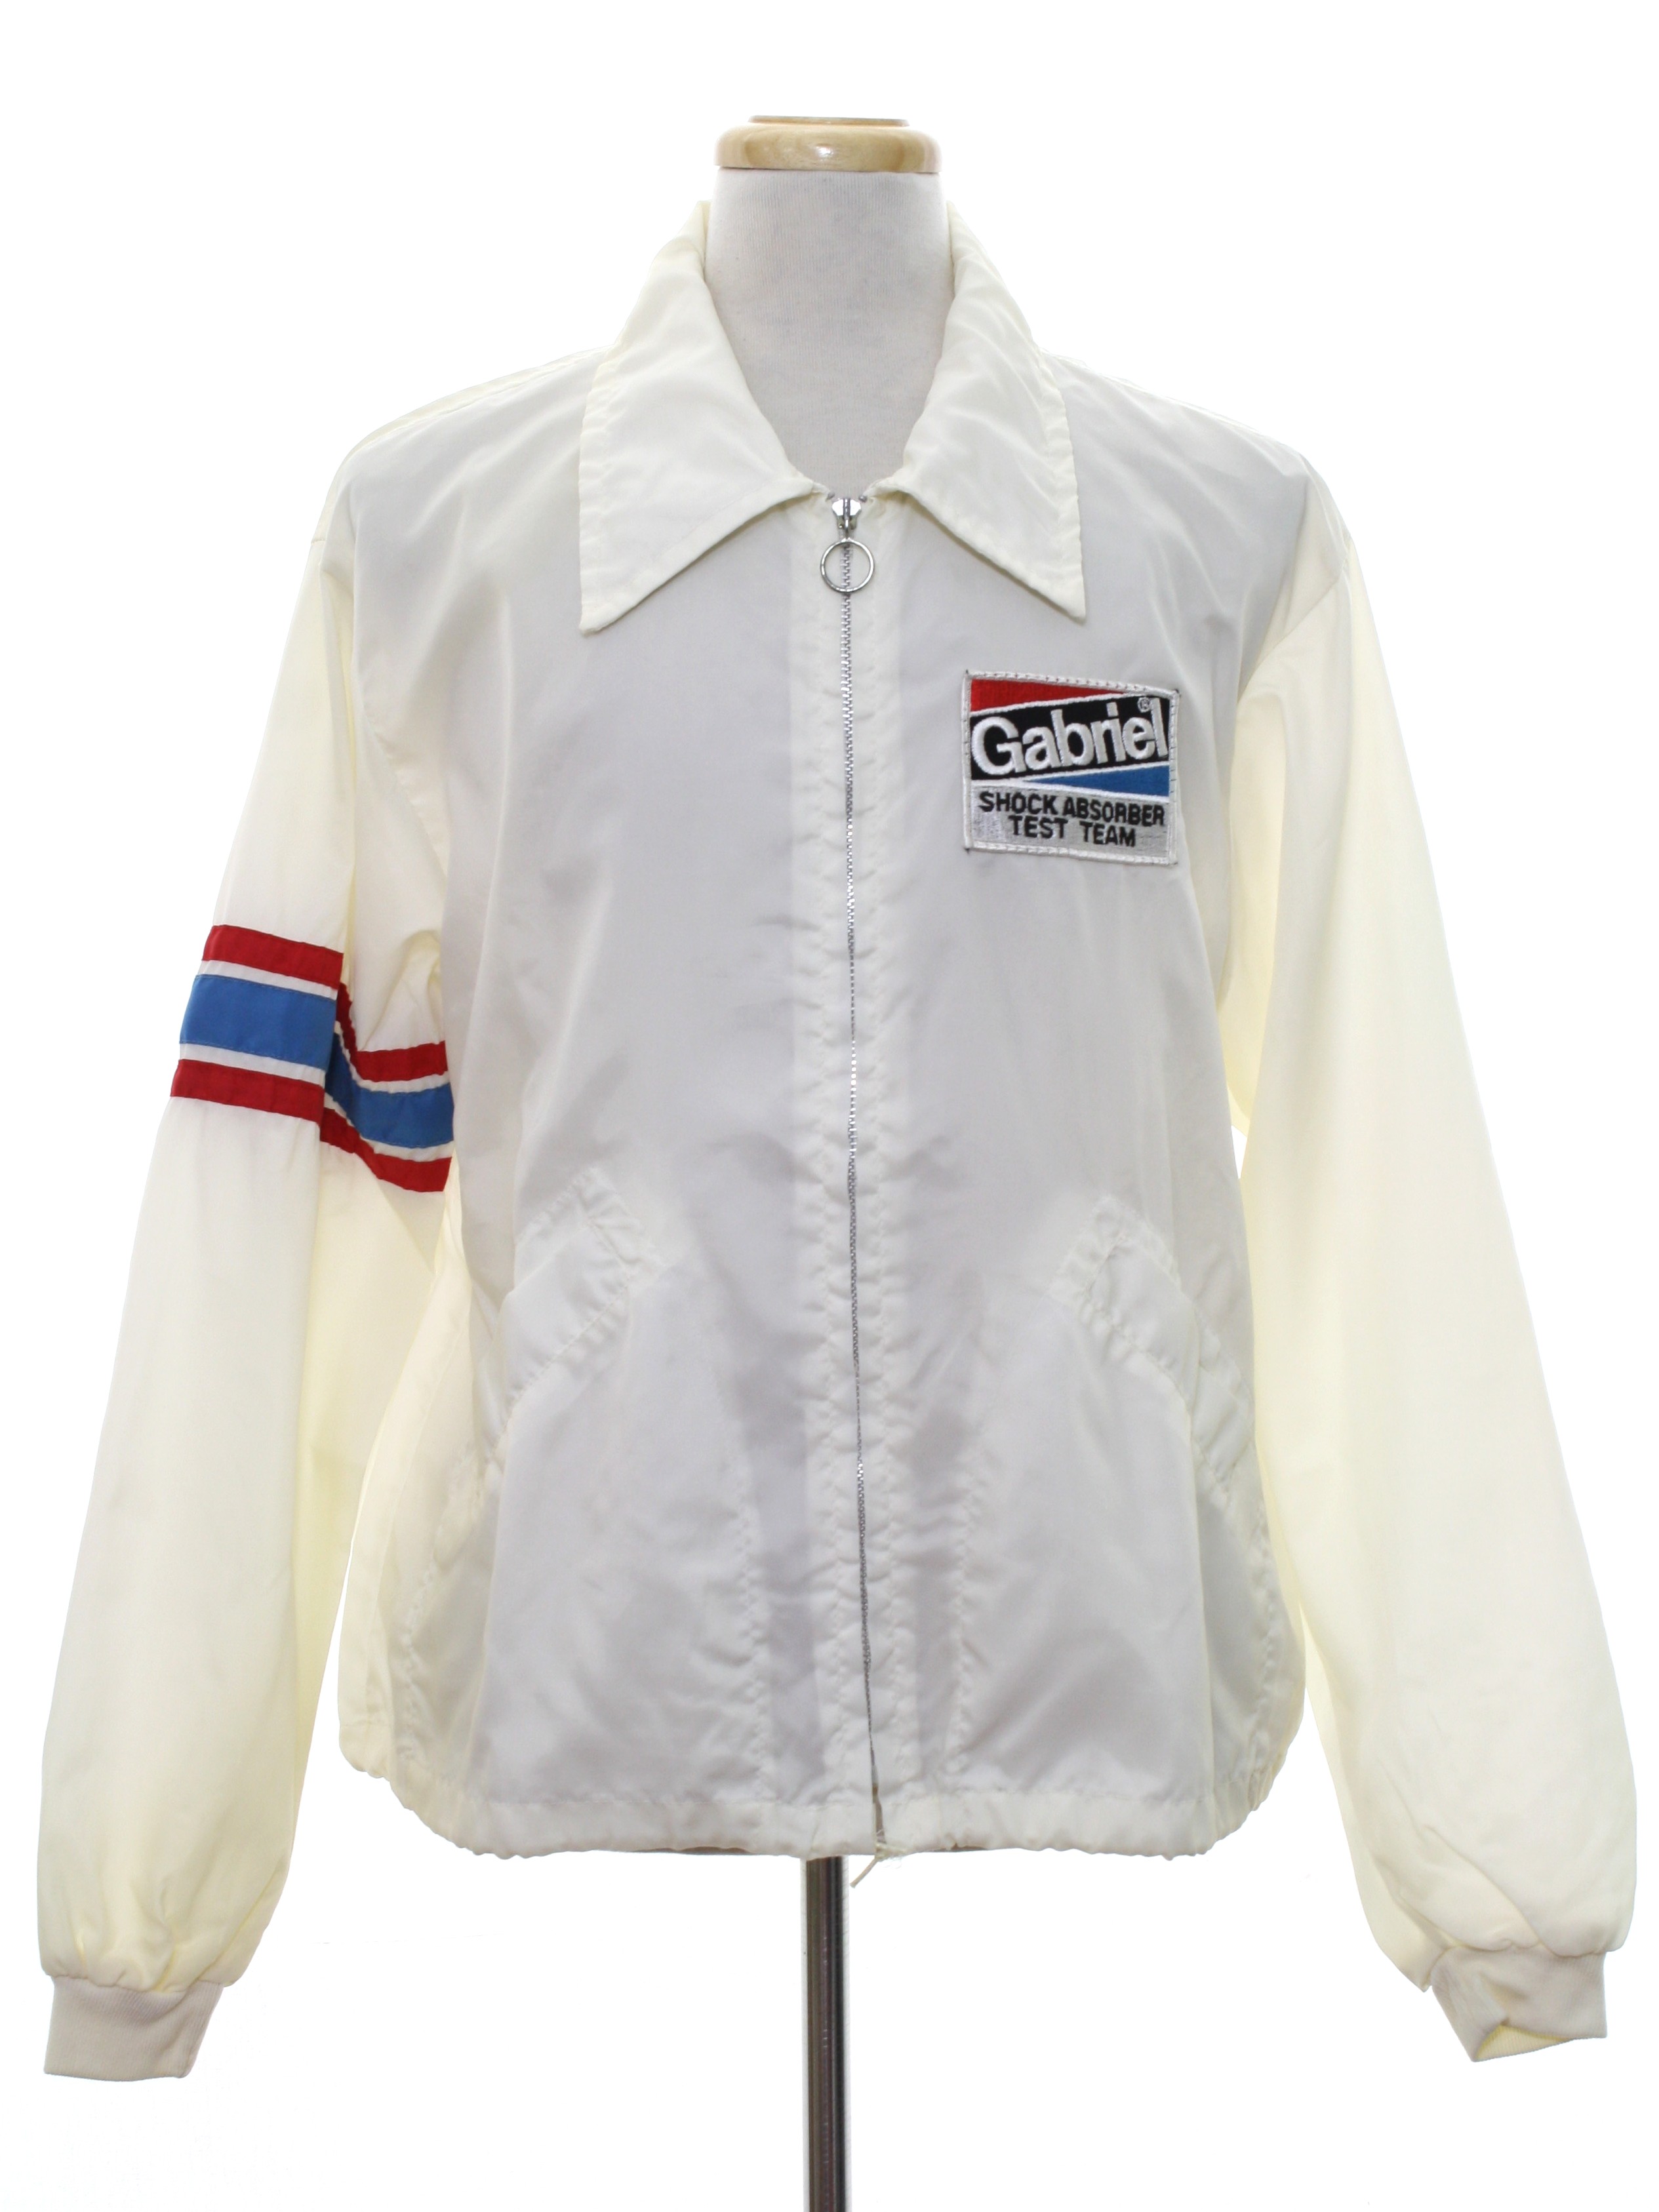 Retro 1970's Jacket (Missing Label) : 70s -Missing Label- Mens white ...